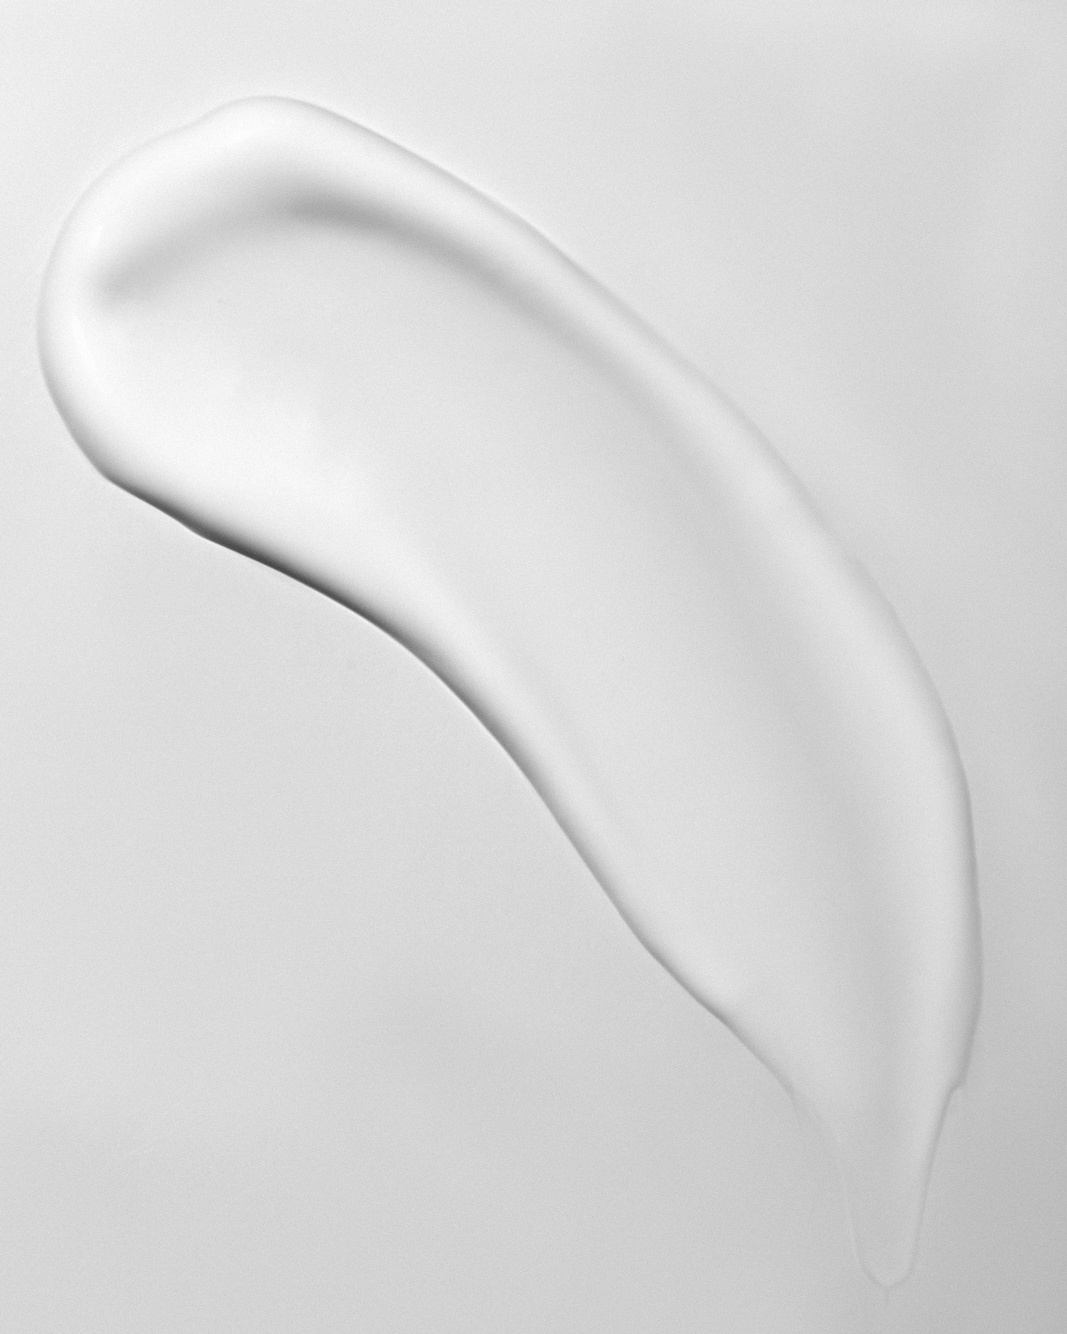 A White Cream on White Surface